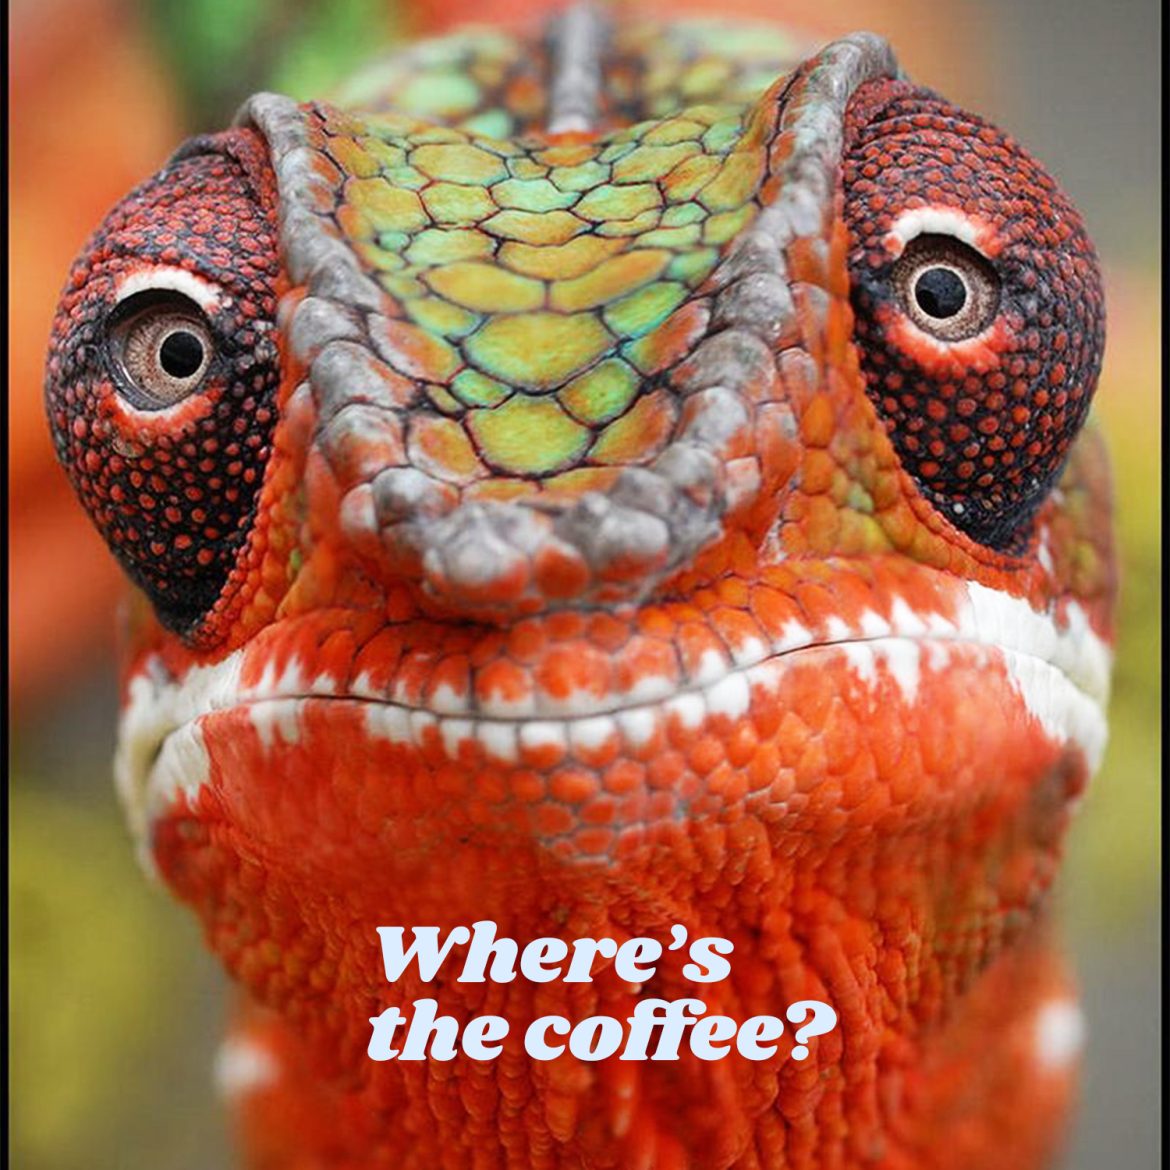 Where’s the coffee?